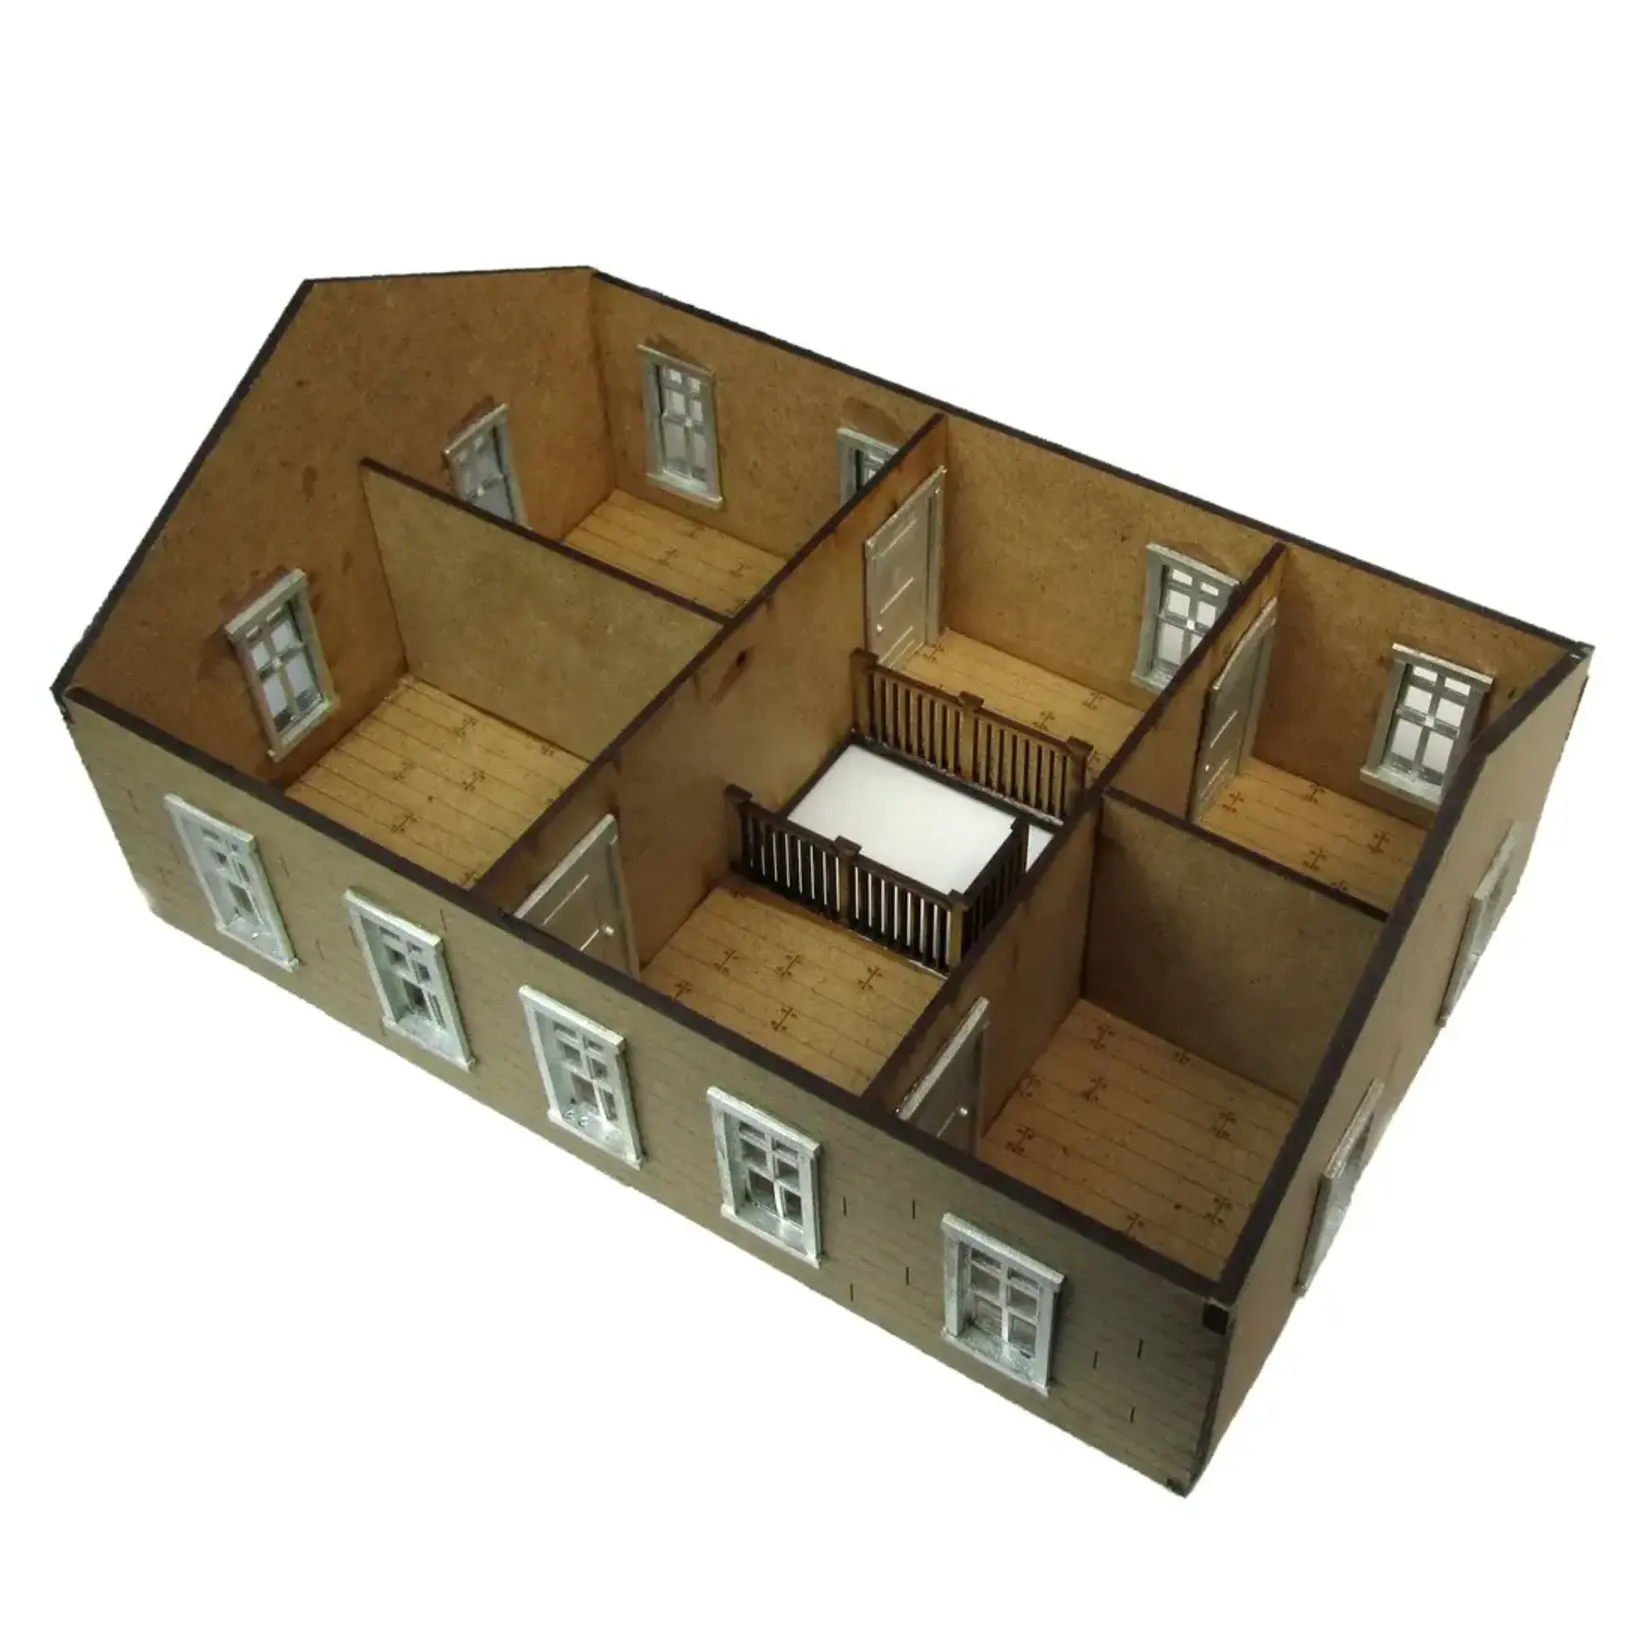 Knuckleduster Miniatures Boarding House